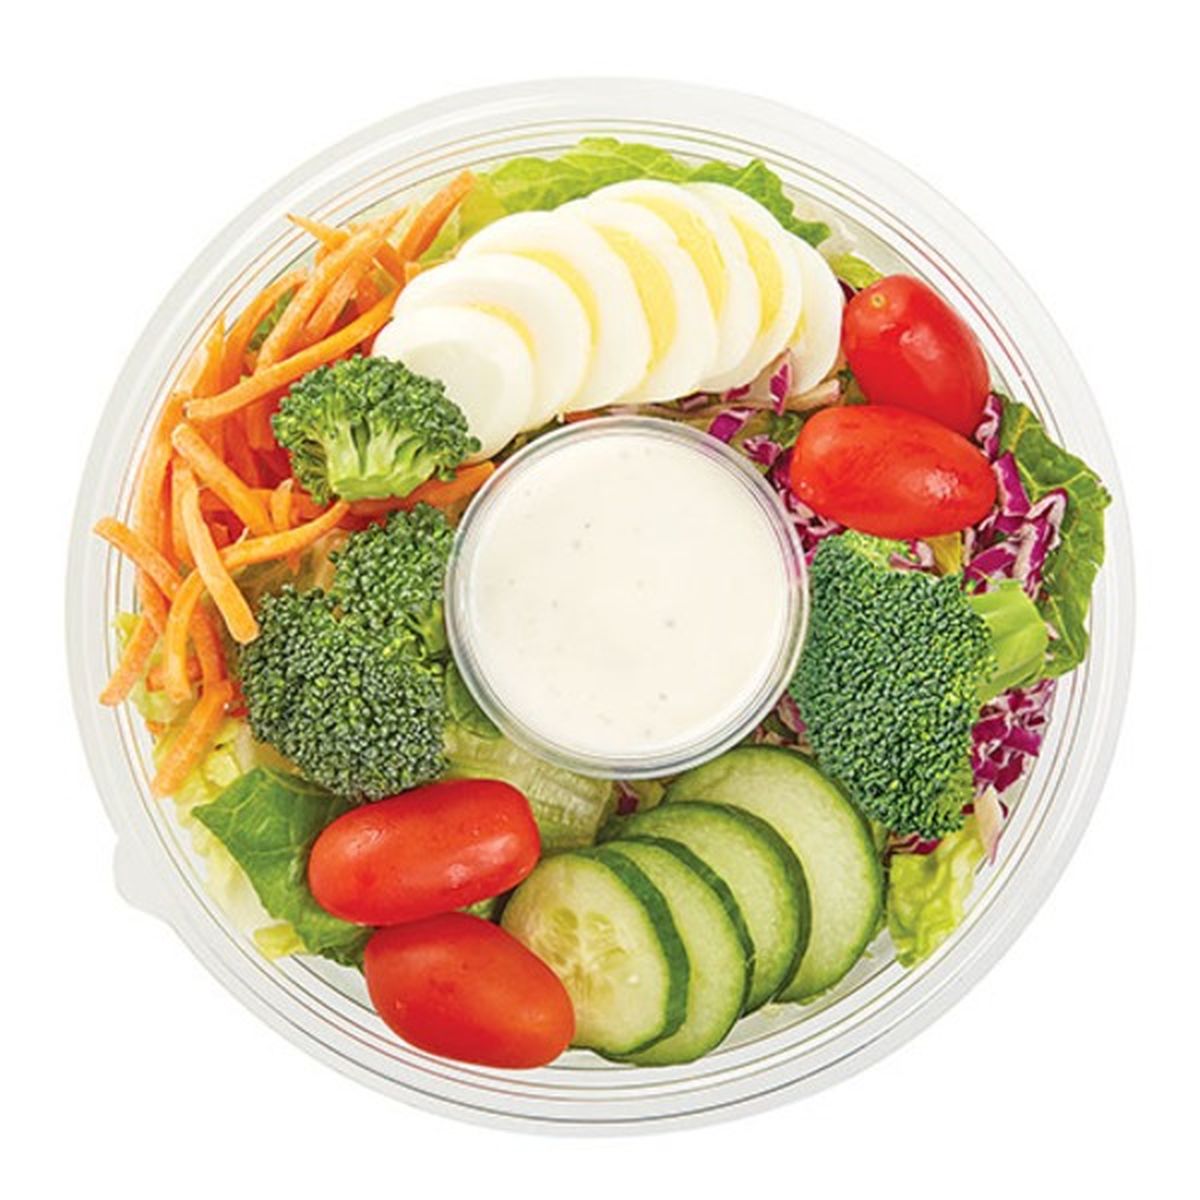 Calories in Wegmans Large Garden Salad with Buttermilk Ranch Dressing